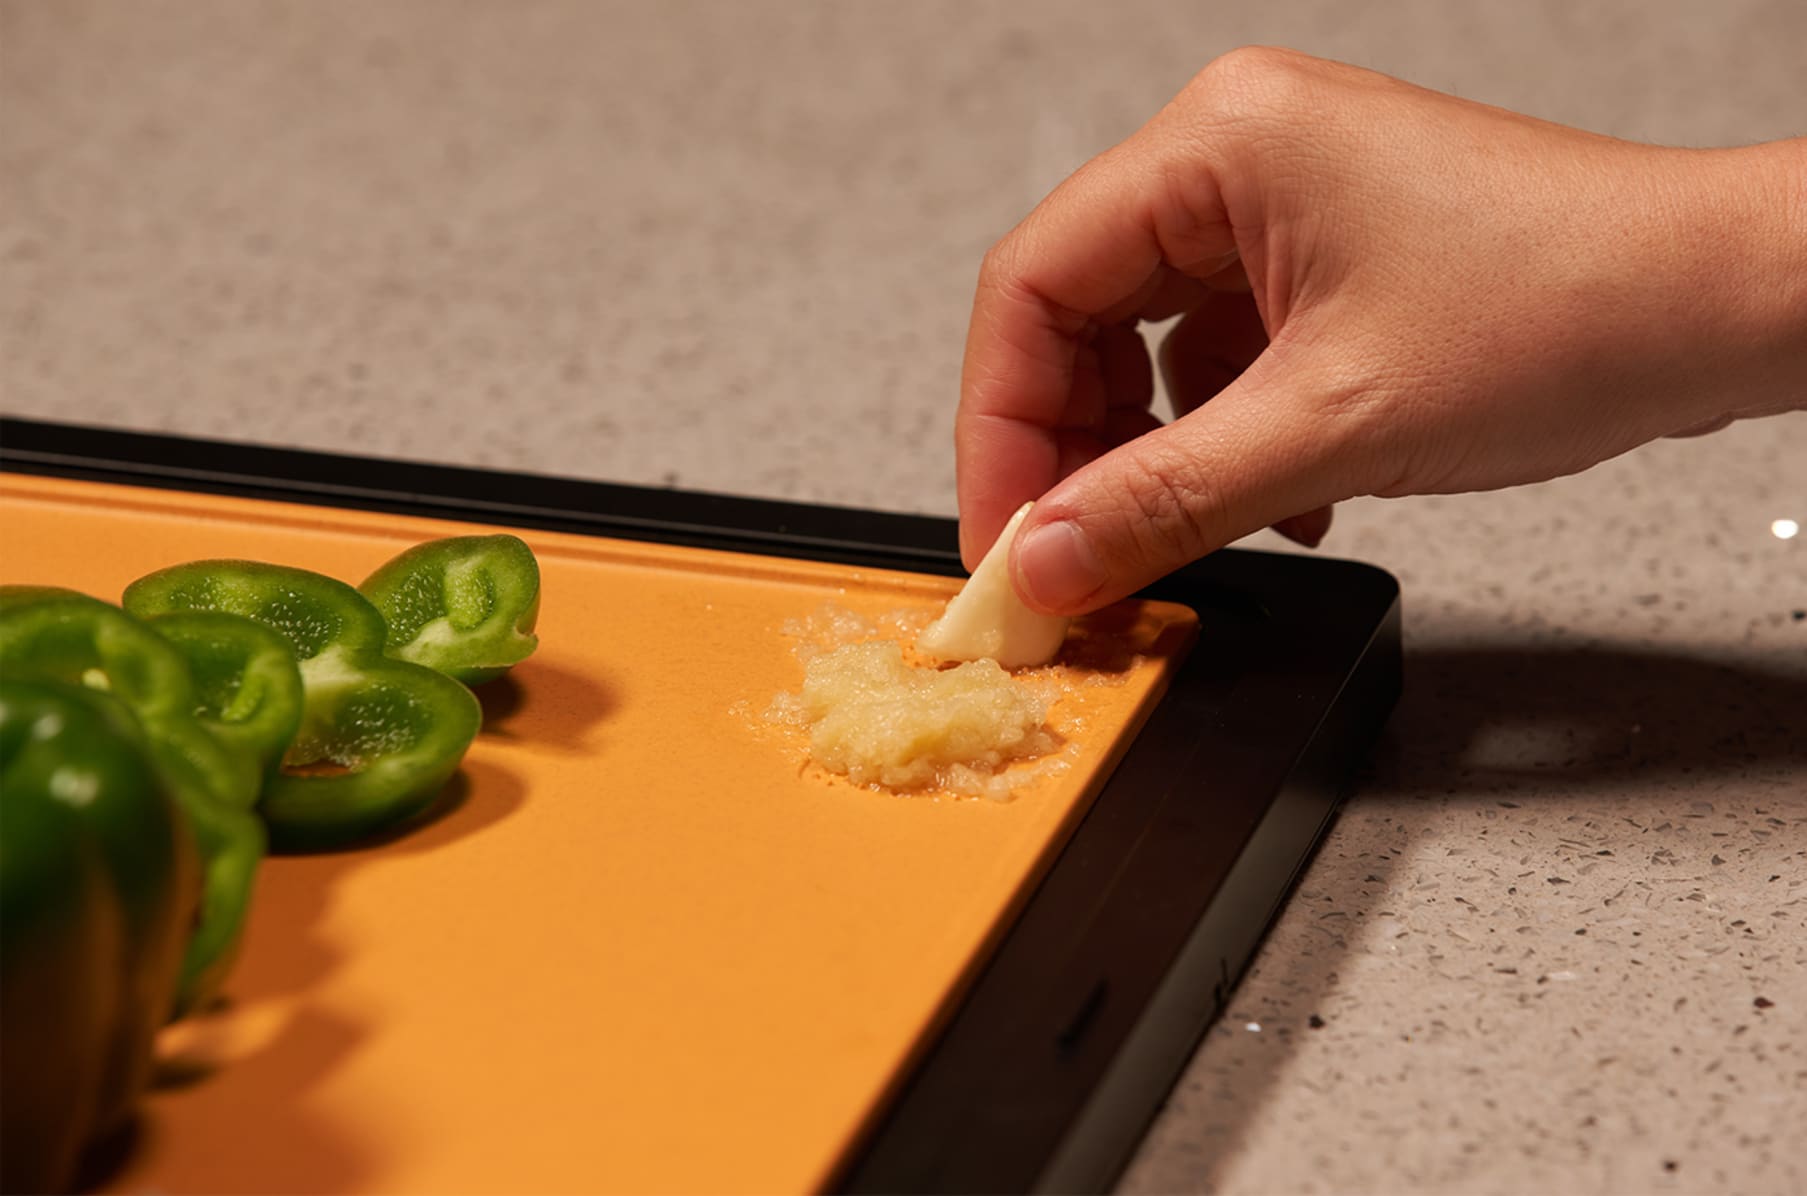 Chopsy — the Smart Chopping Board